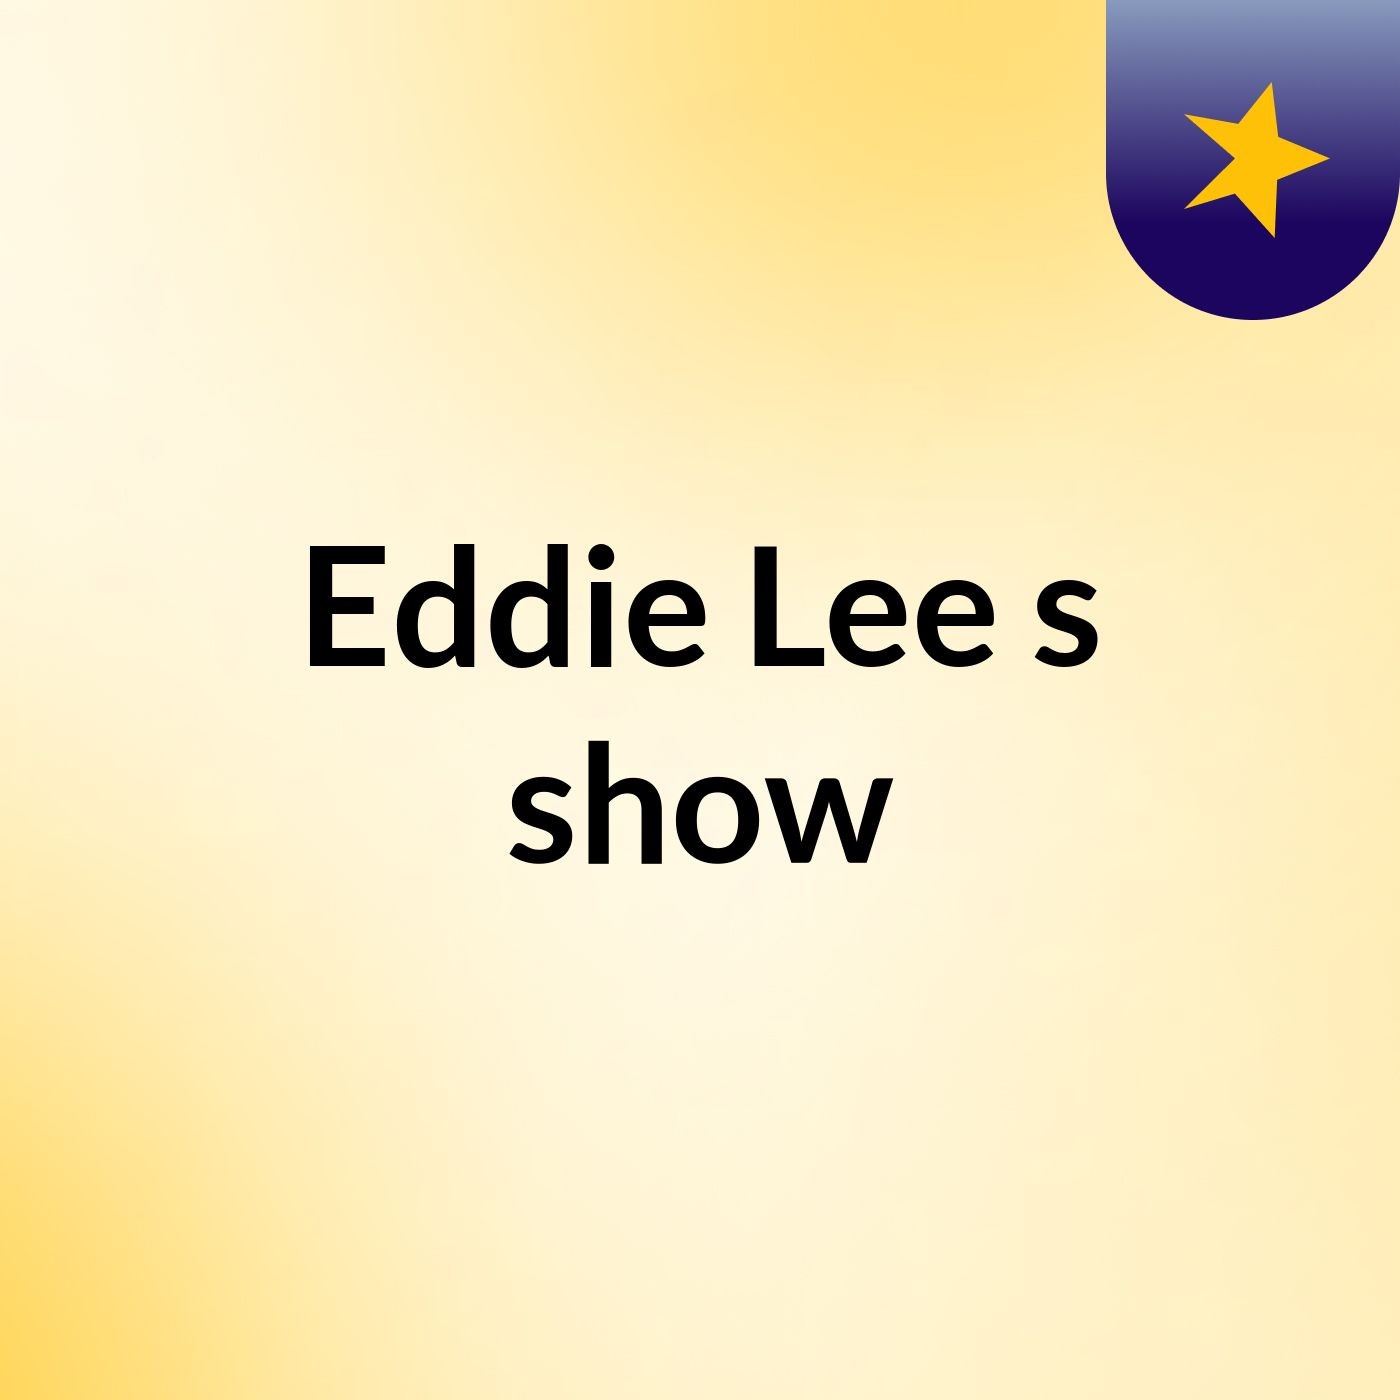 Eddie Lee's show